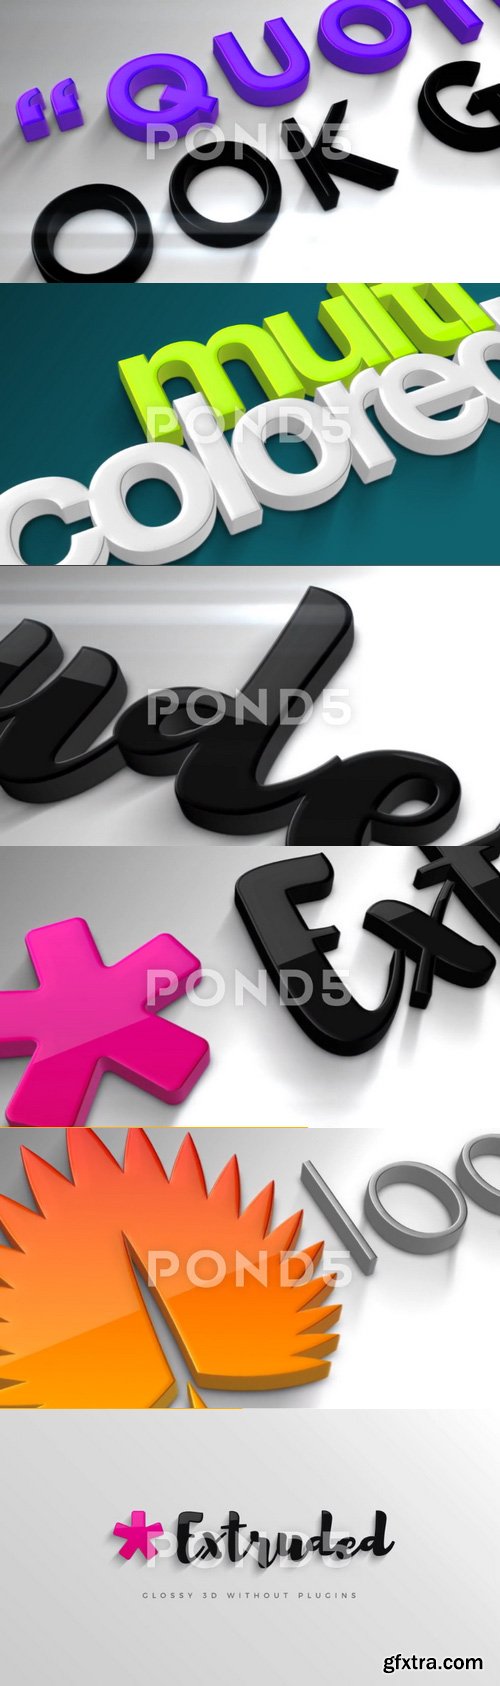 Pond5 - Extruded 3D Logo Creator 72076098